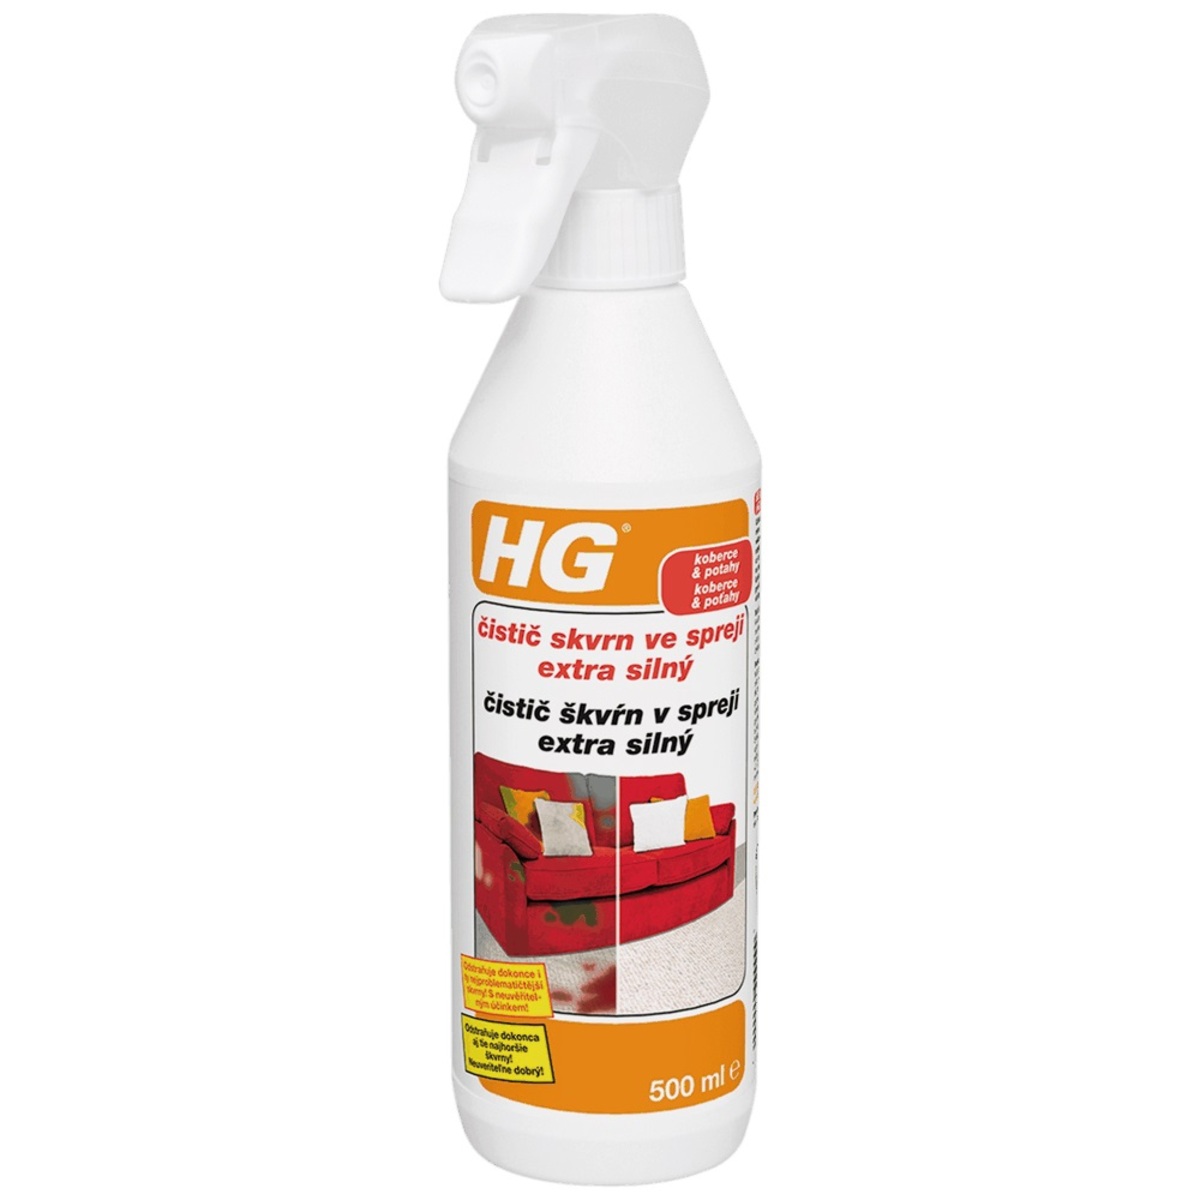 HG čistič skvrn ve spreji extra silný HGESCS HG